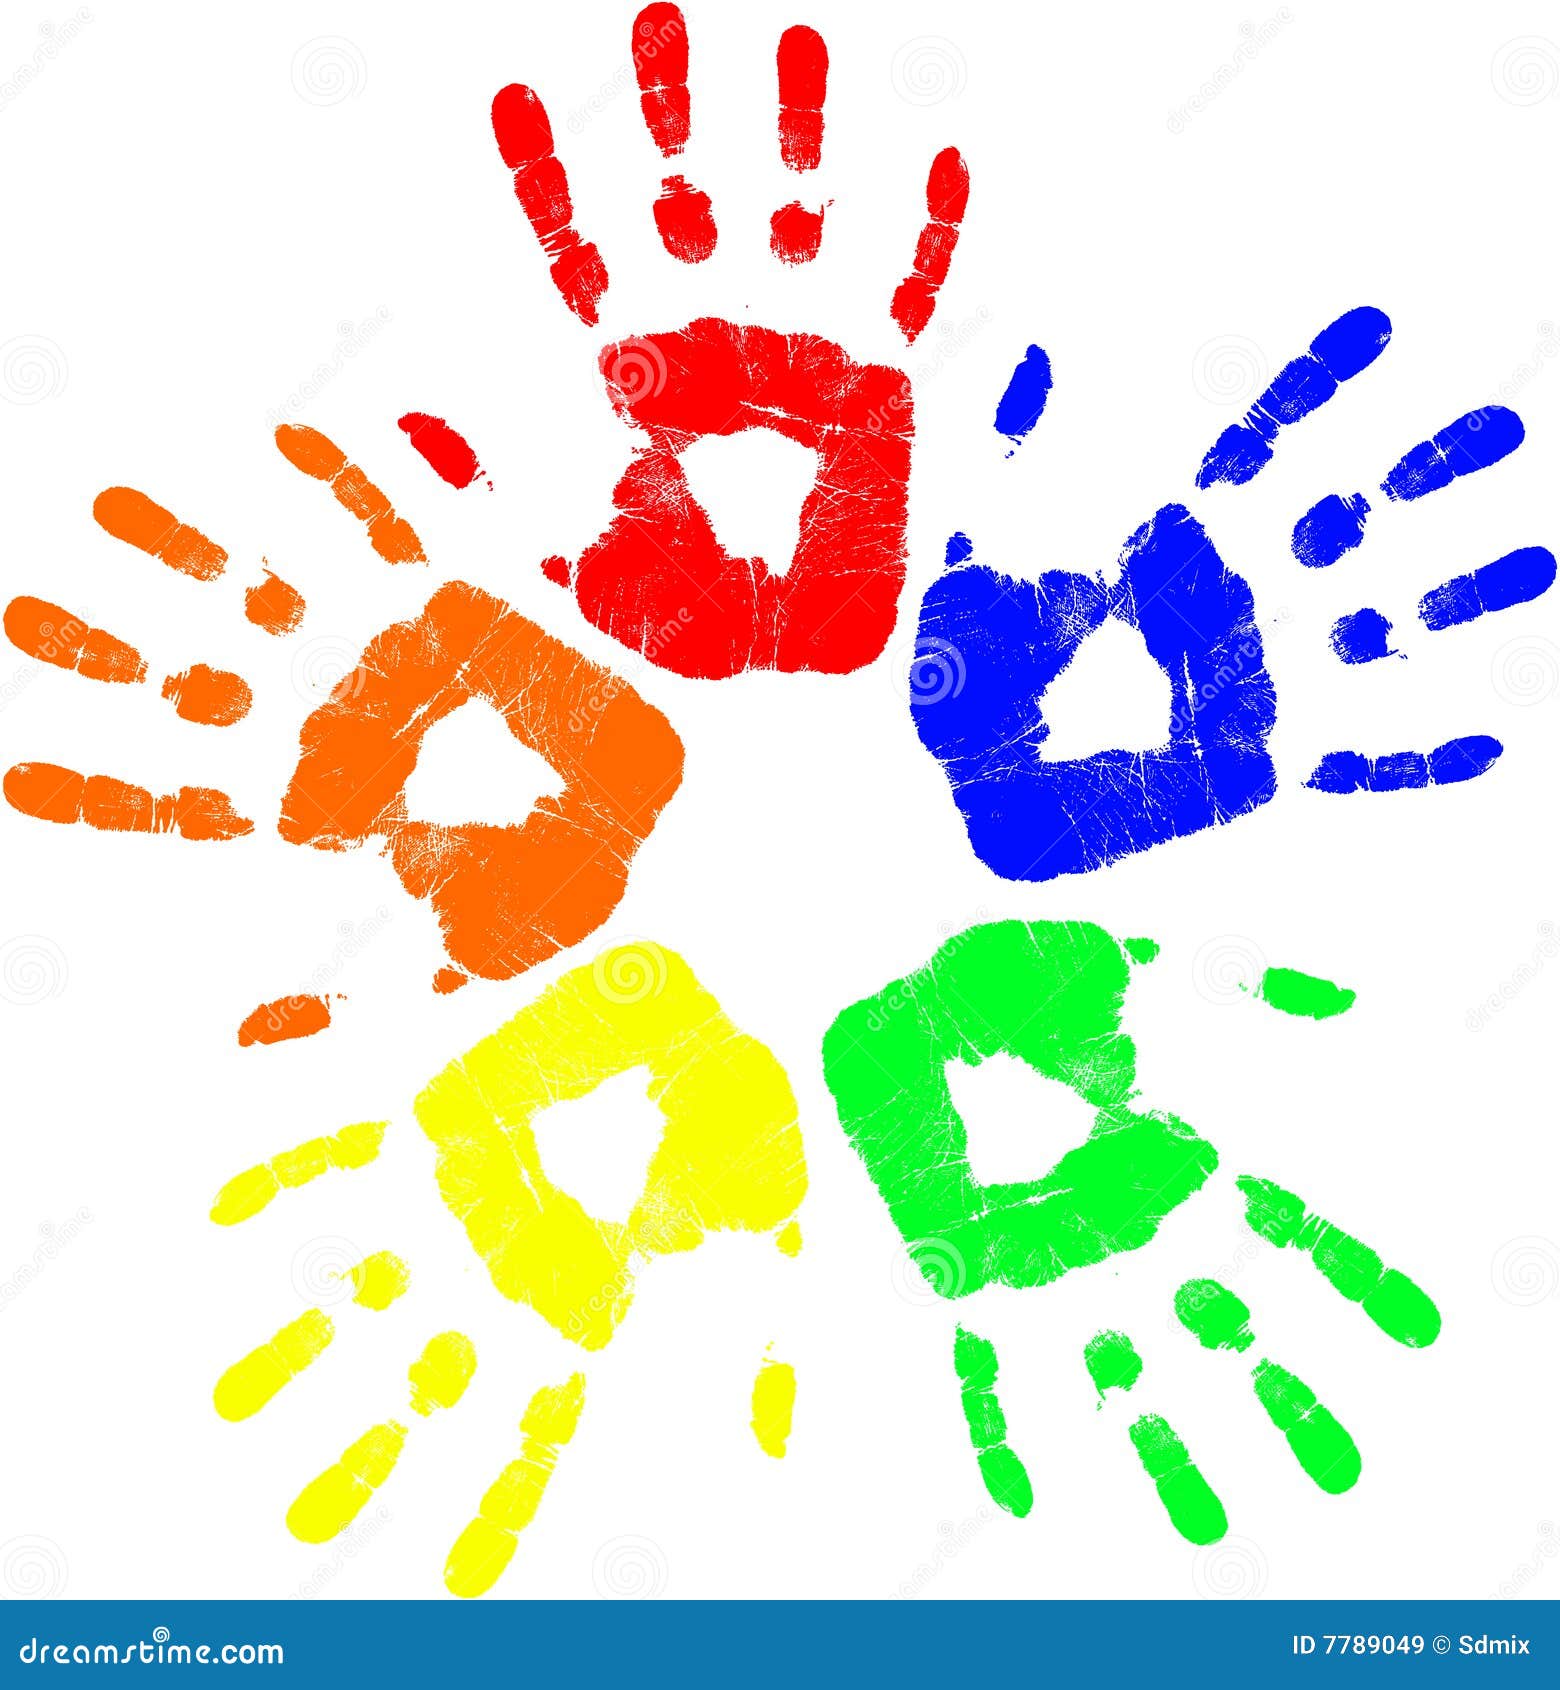 All hands the colours high. Цветные Отпечатки ладоней. Цветные Отпечатки рук детей. Отпечаток ладони разноцветный. Разноцветные Отпечатки ладошек.